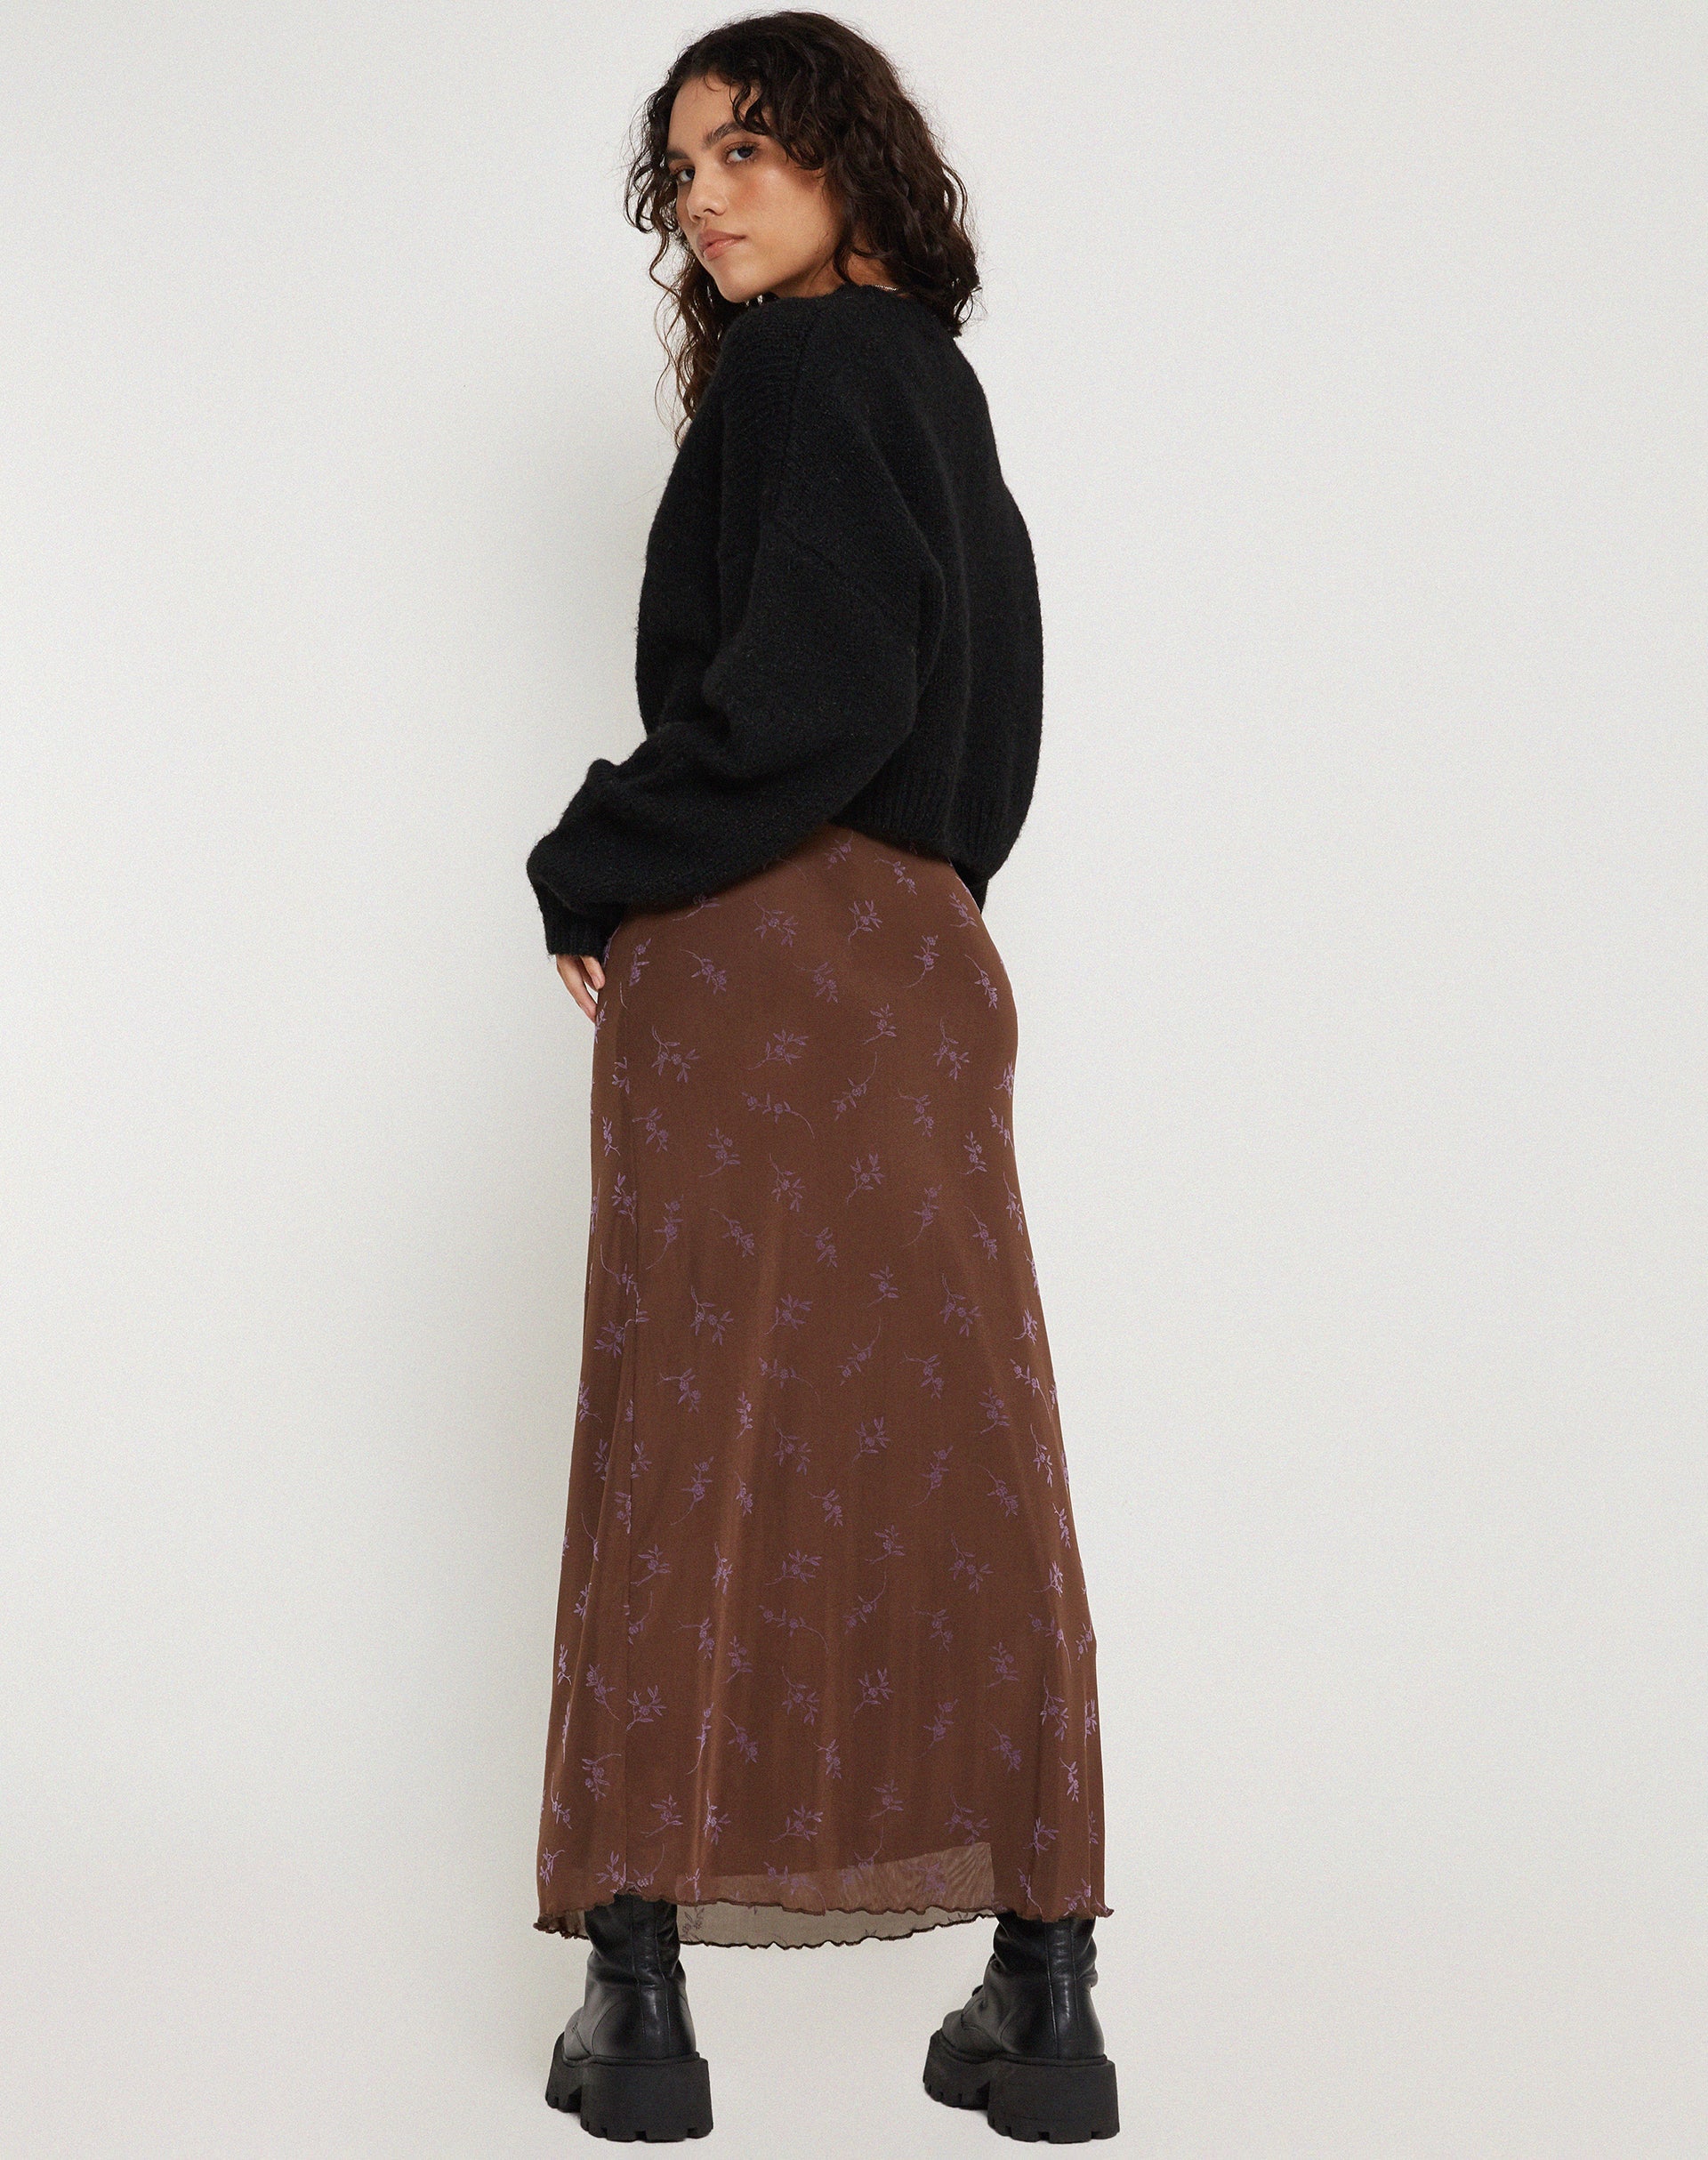 Rindu Maxi Skirt in Flower Stem Flock Brown